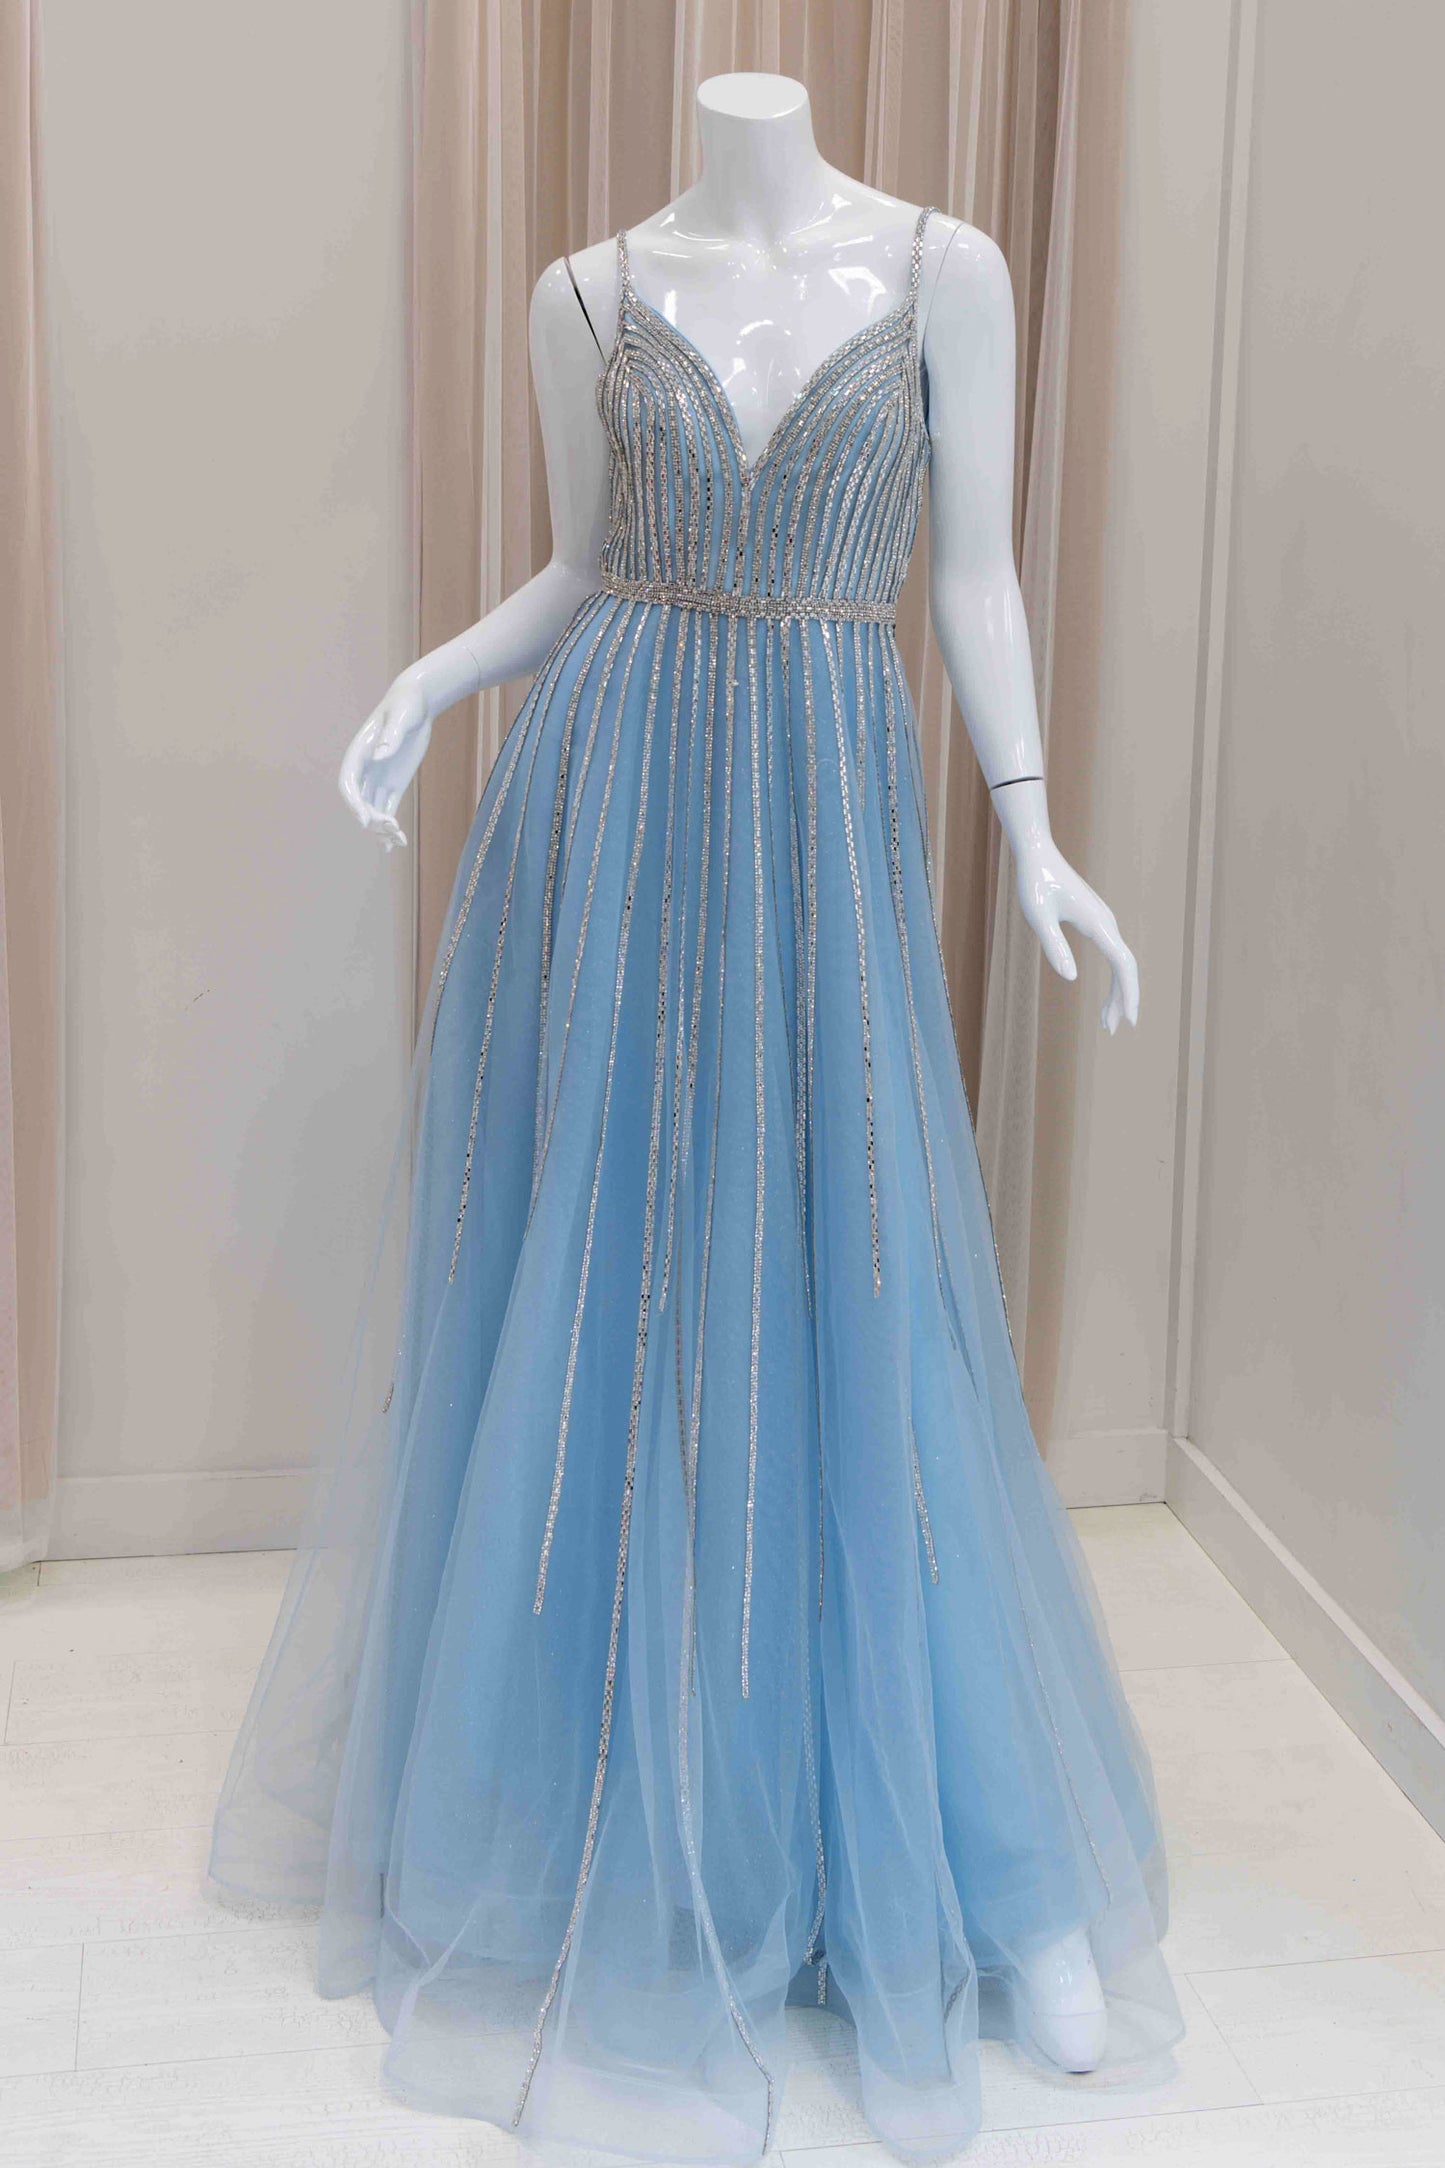 Daiya Glitter Ball Gown in Light Blue